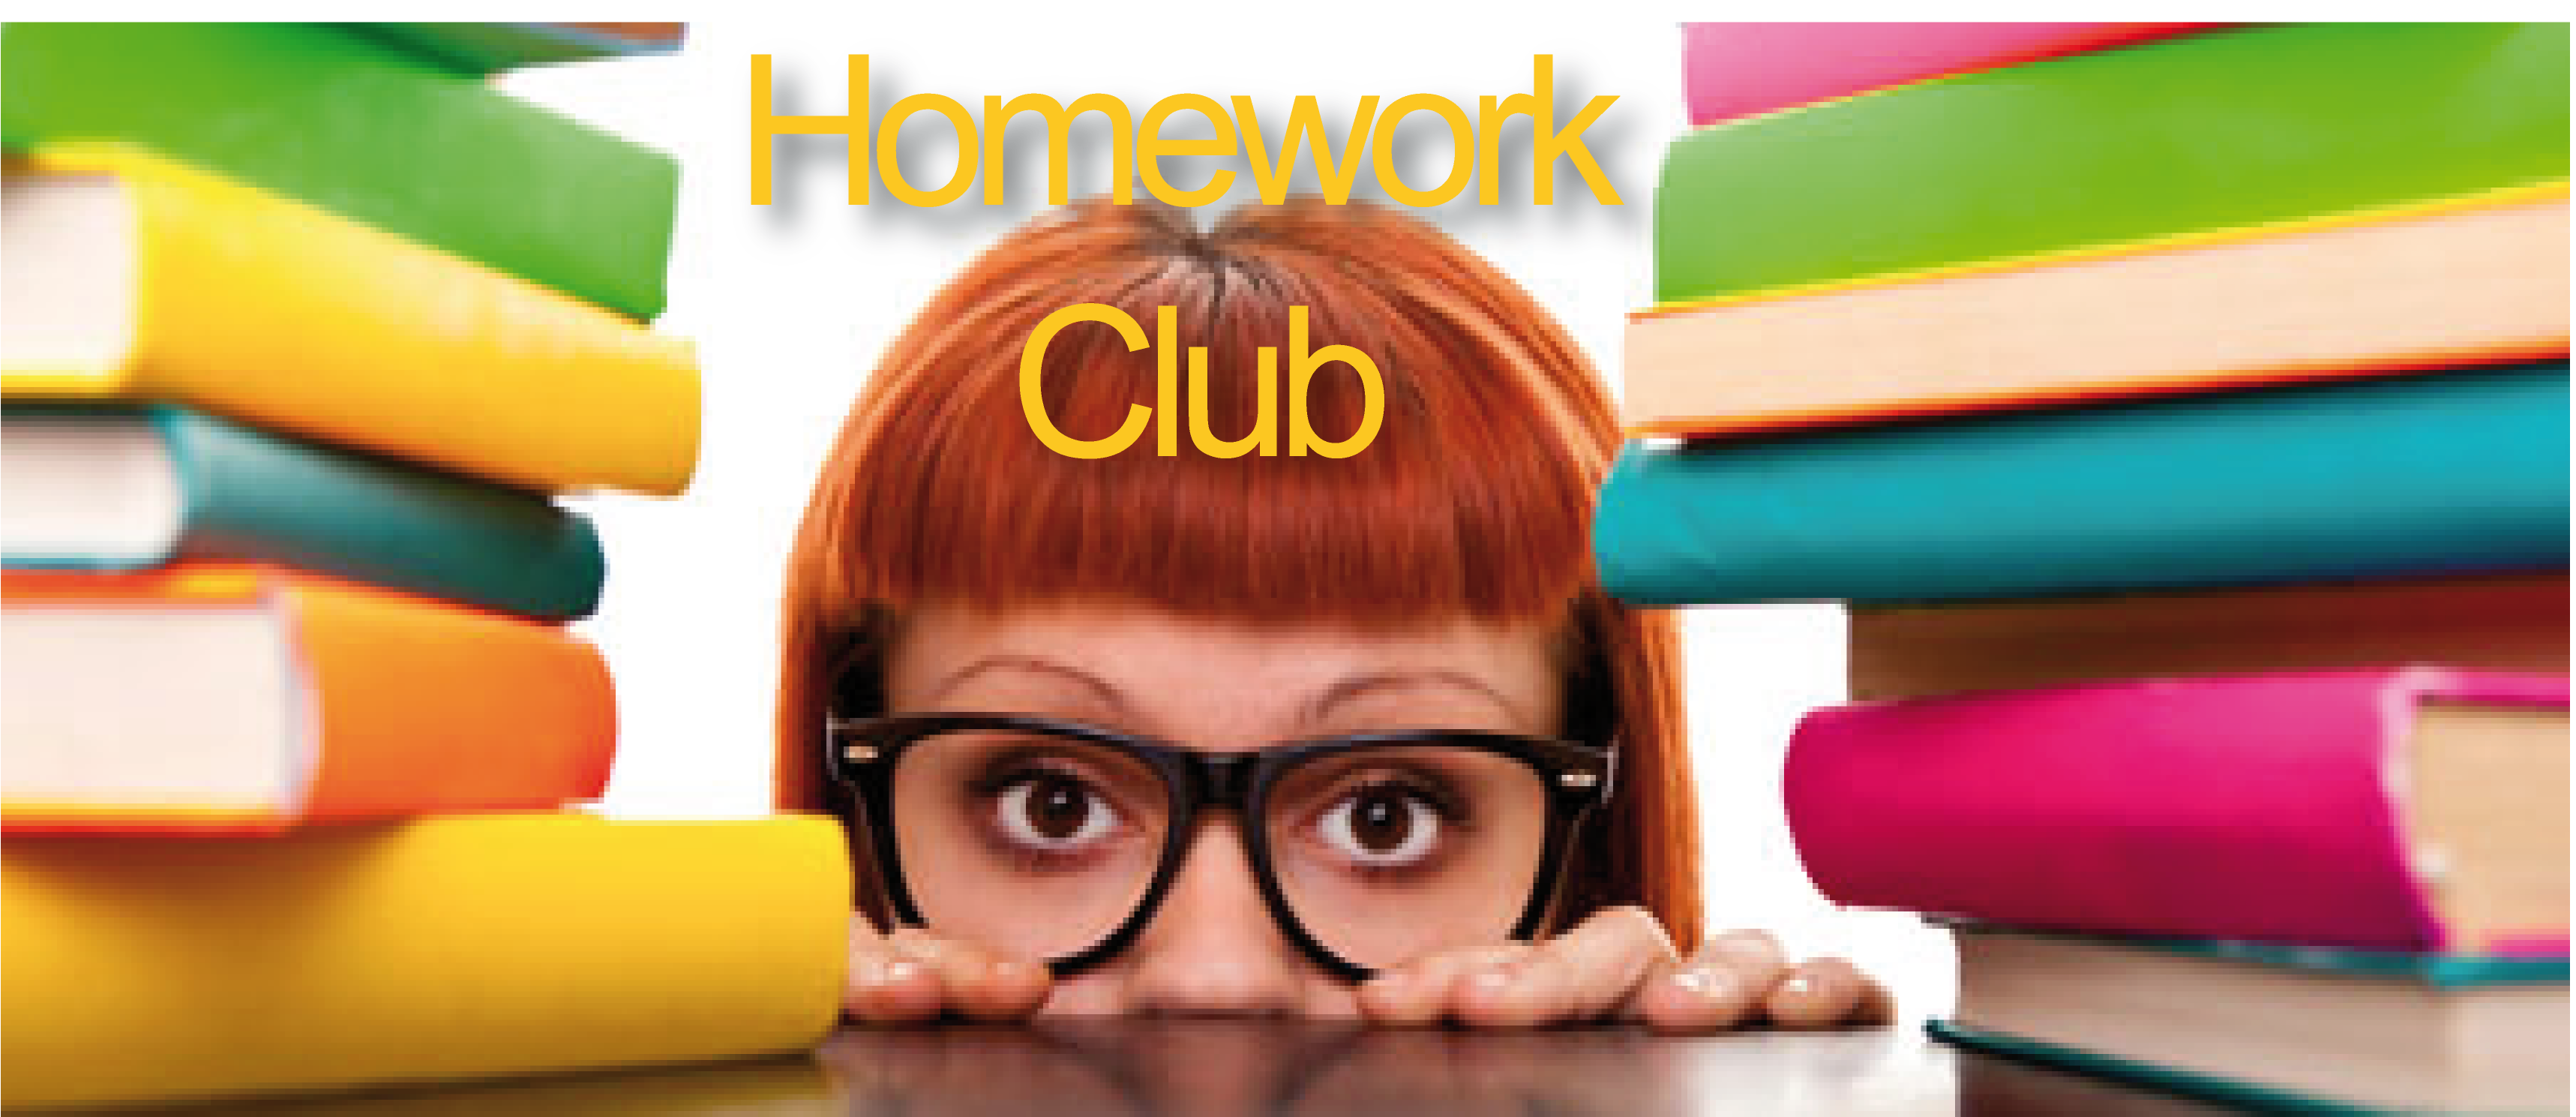 homework club in a sentence